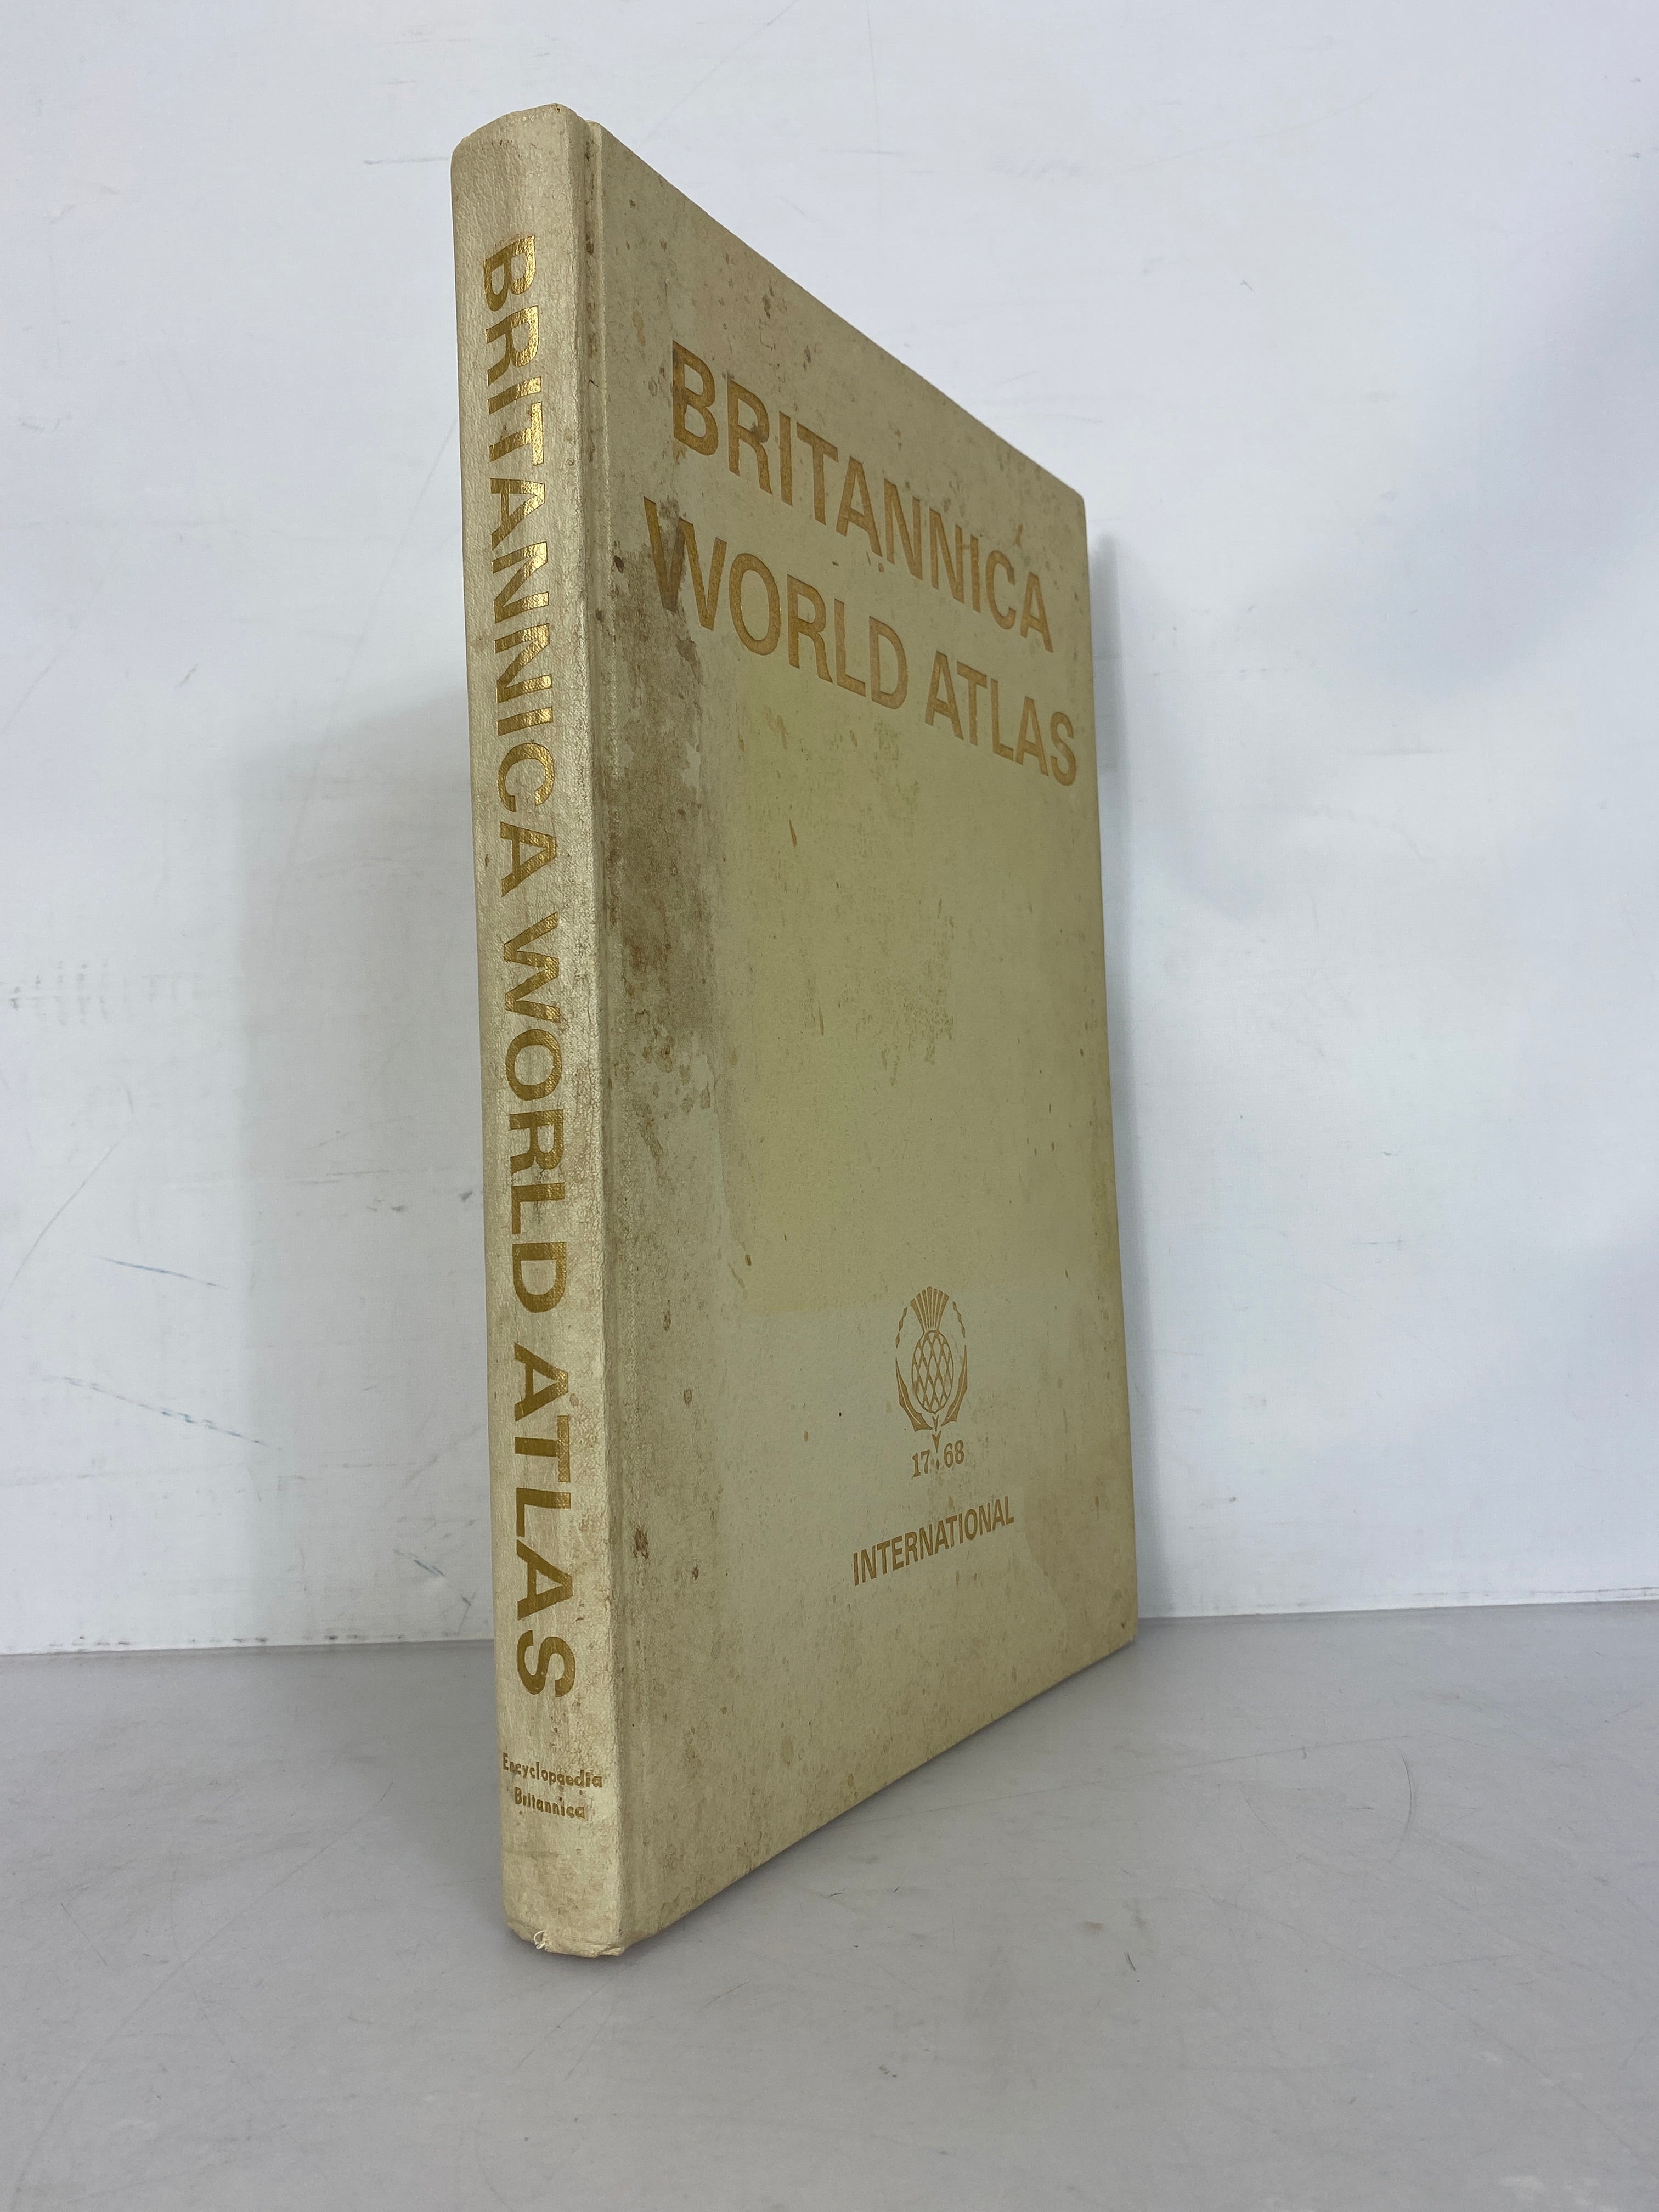 1967 Britannica World Atlas International by Encyclopedia Britannica HC